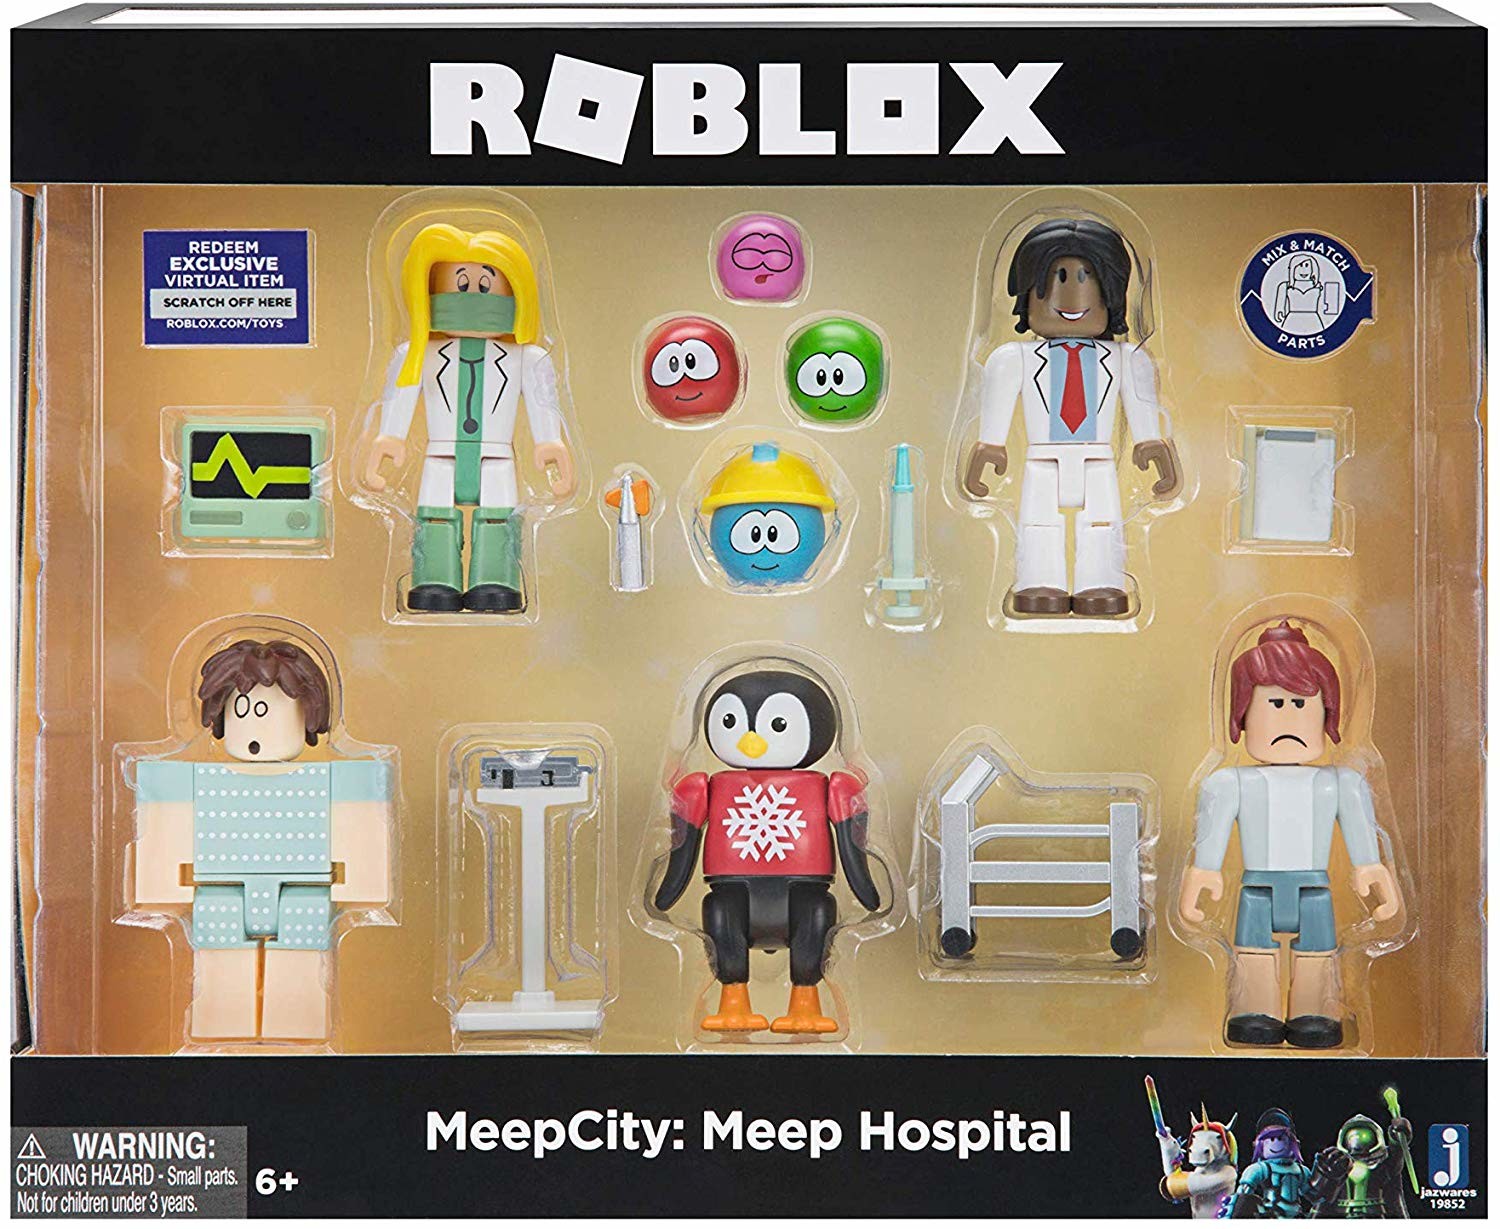 Meepcity Meep Hospital Roblox Action Figure